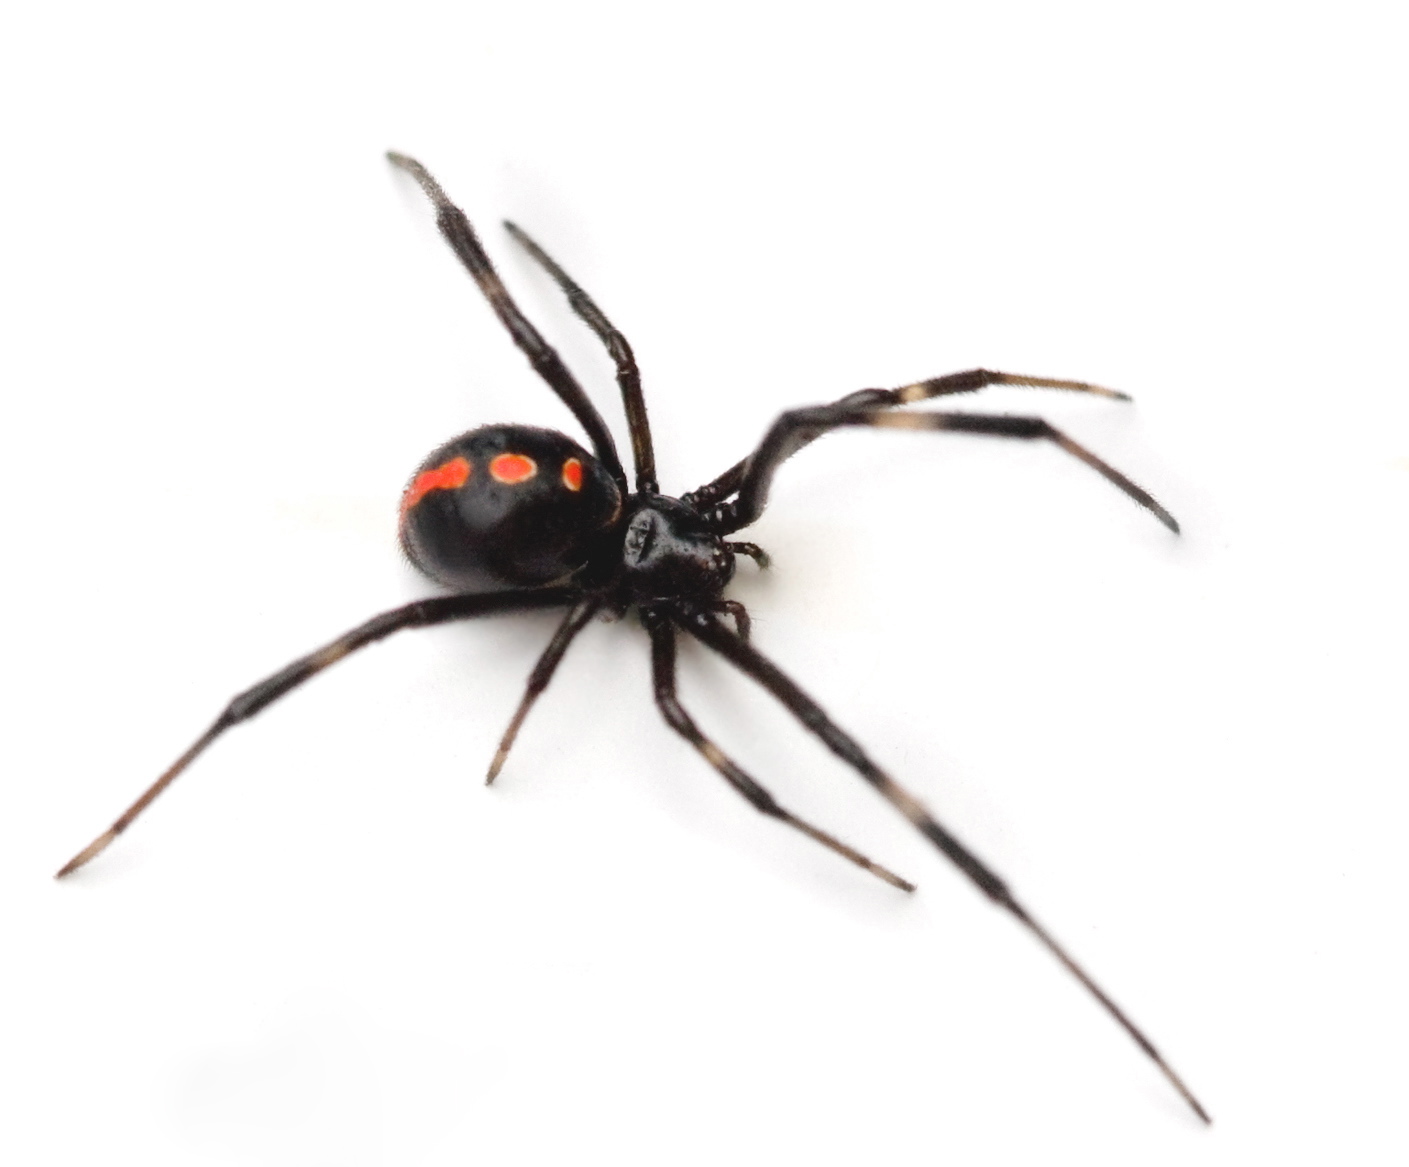 Why a Spider? | Black Widow Communications, LLC